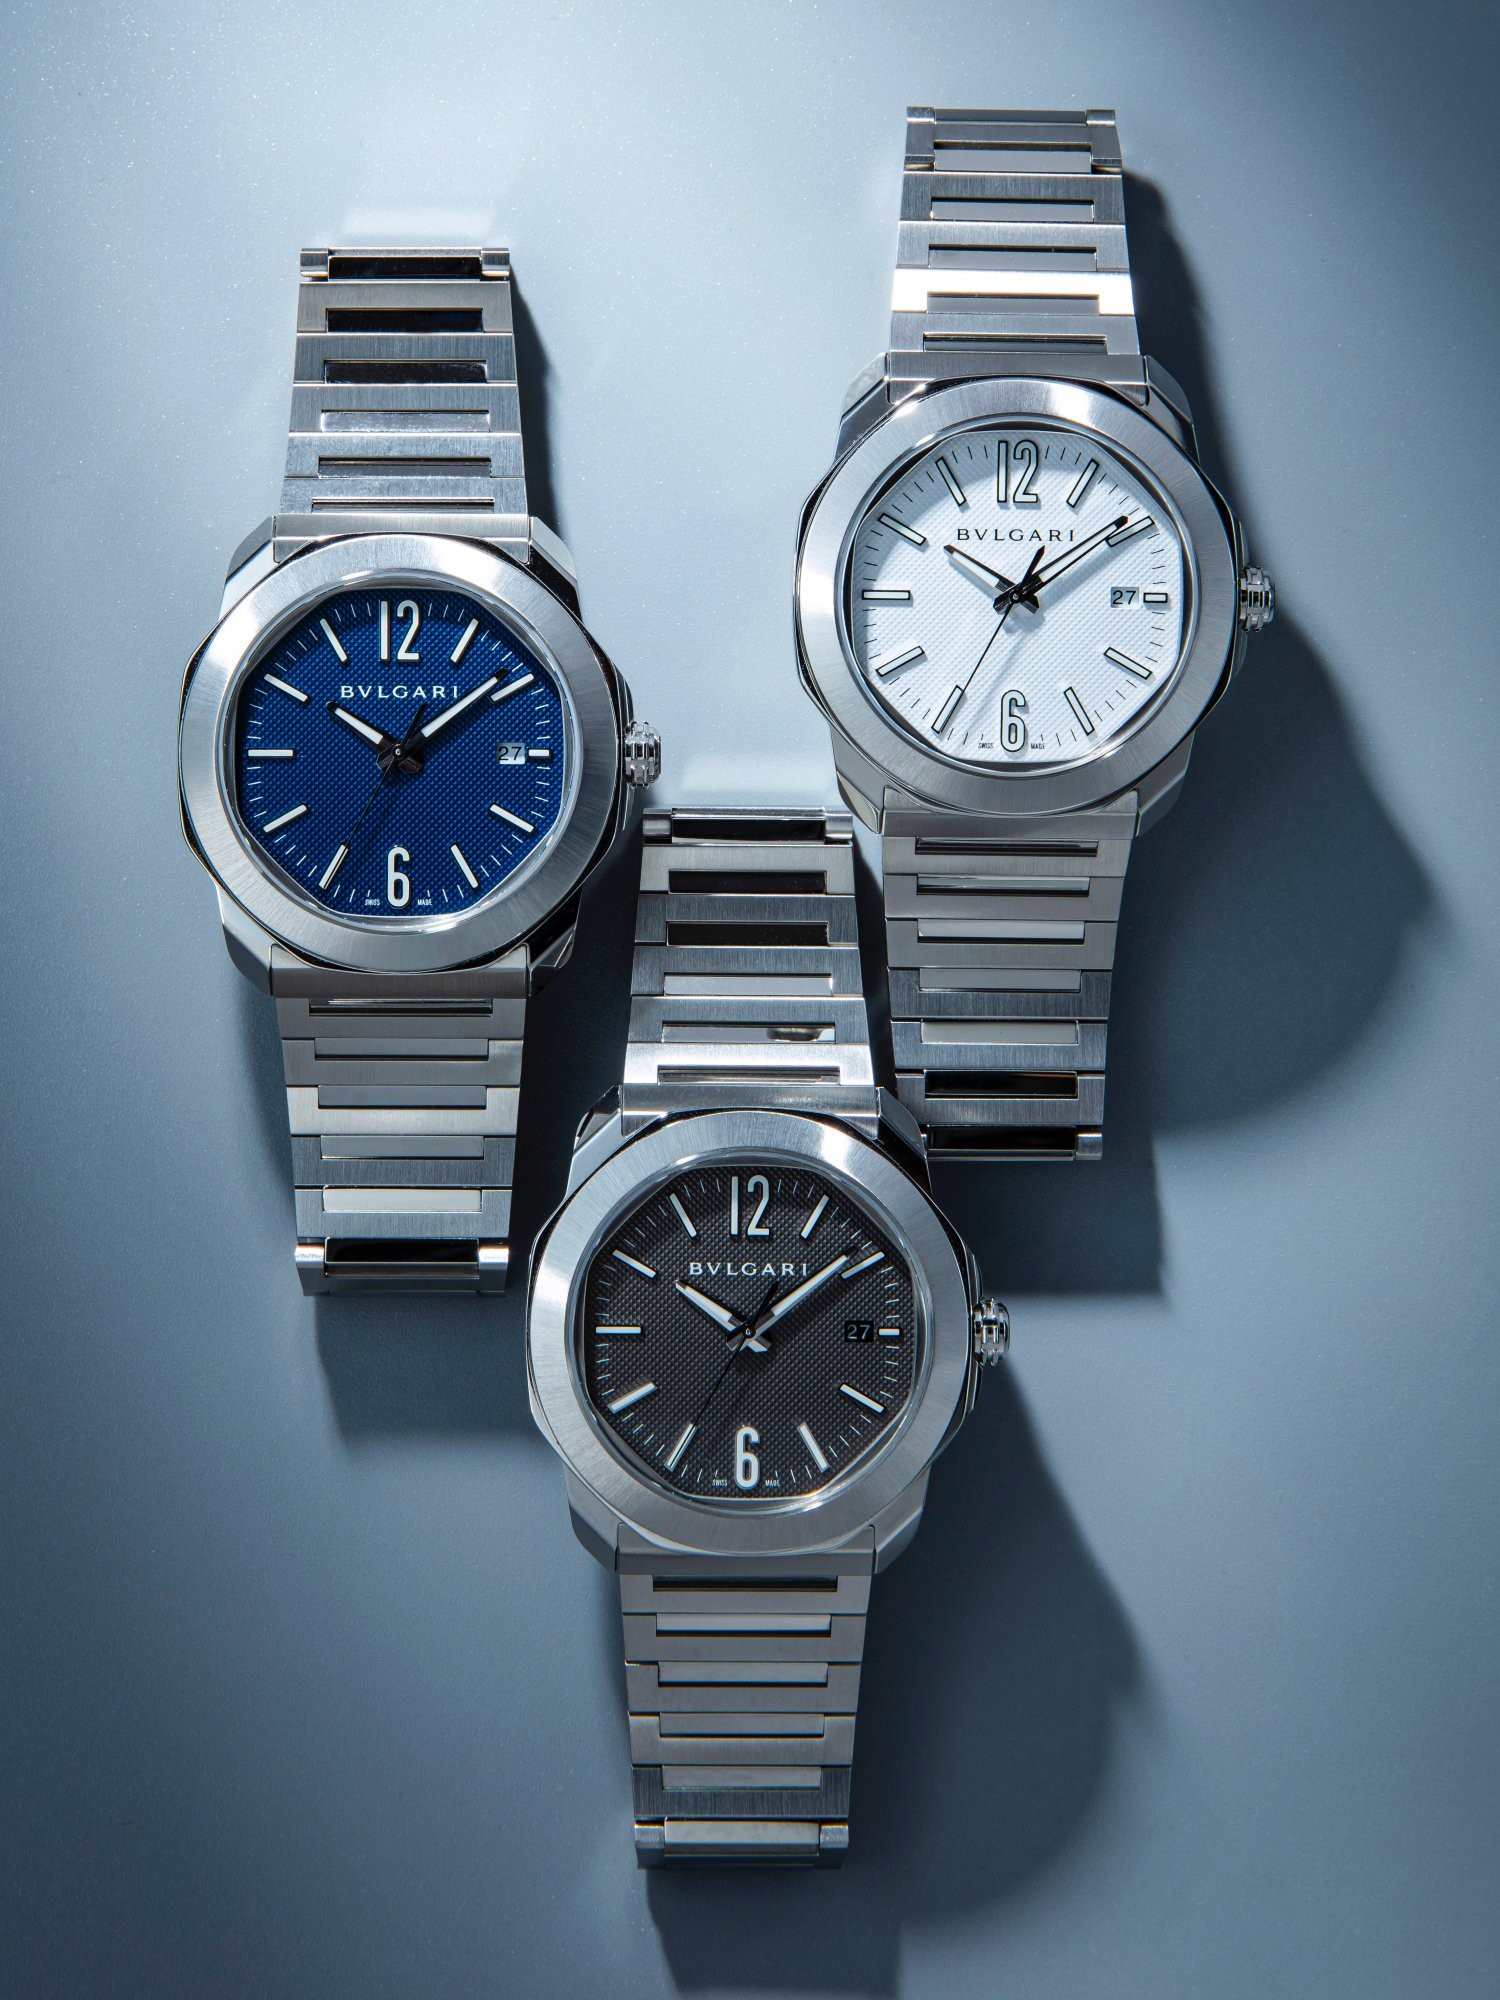 BVLGARI的Octo Roma Automatic 大三針日曆錶款，除了有似圓非圓的八角錶殼與切面錶耳的結構，更是Octo系列首款附錶帶快拆結構的錶款，可自行更換鍊帶或彩色橡帶。面盤更首度採用巴黎釘紋裝飾。錶徑41mm，防水達100米。定價約NT$229,700。